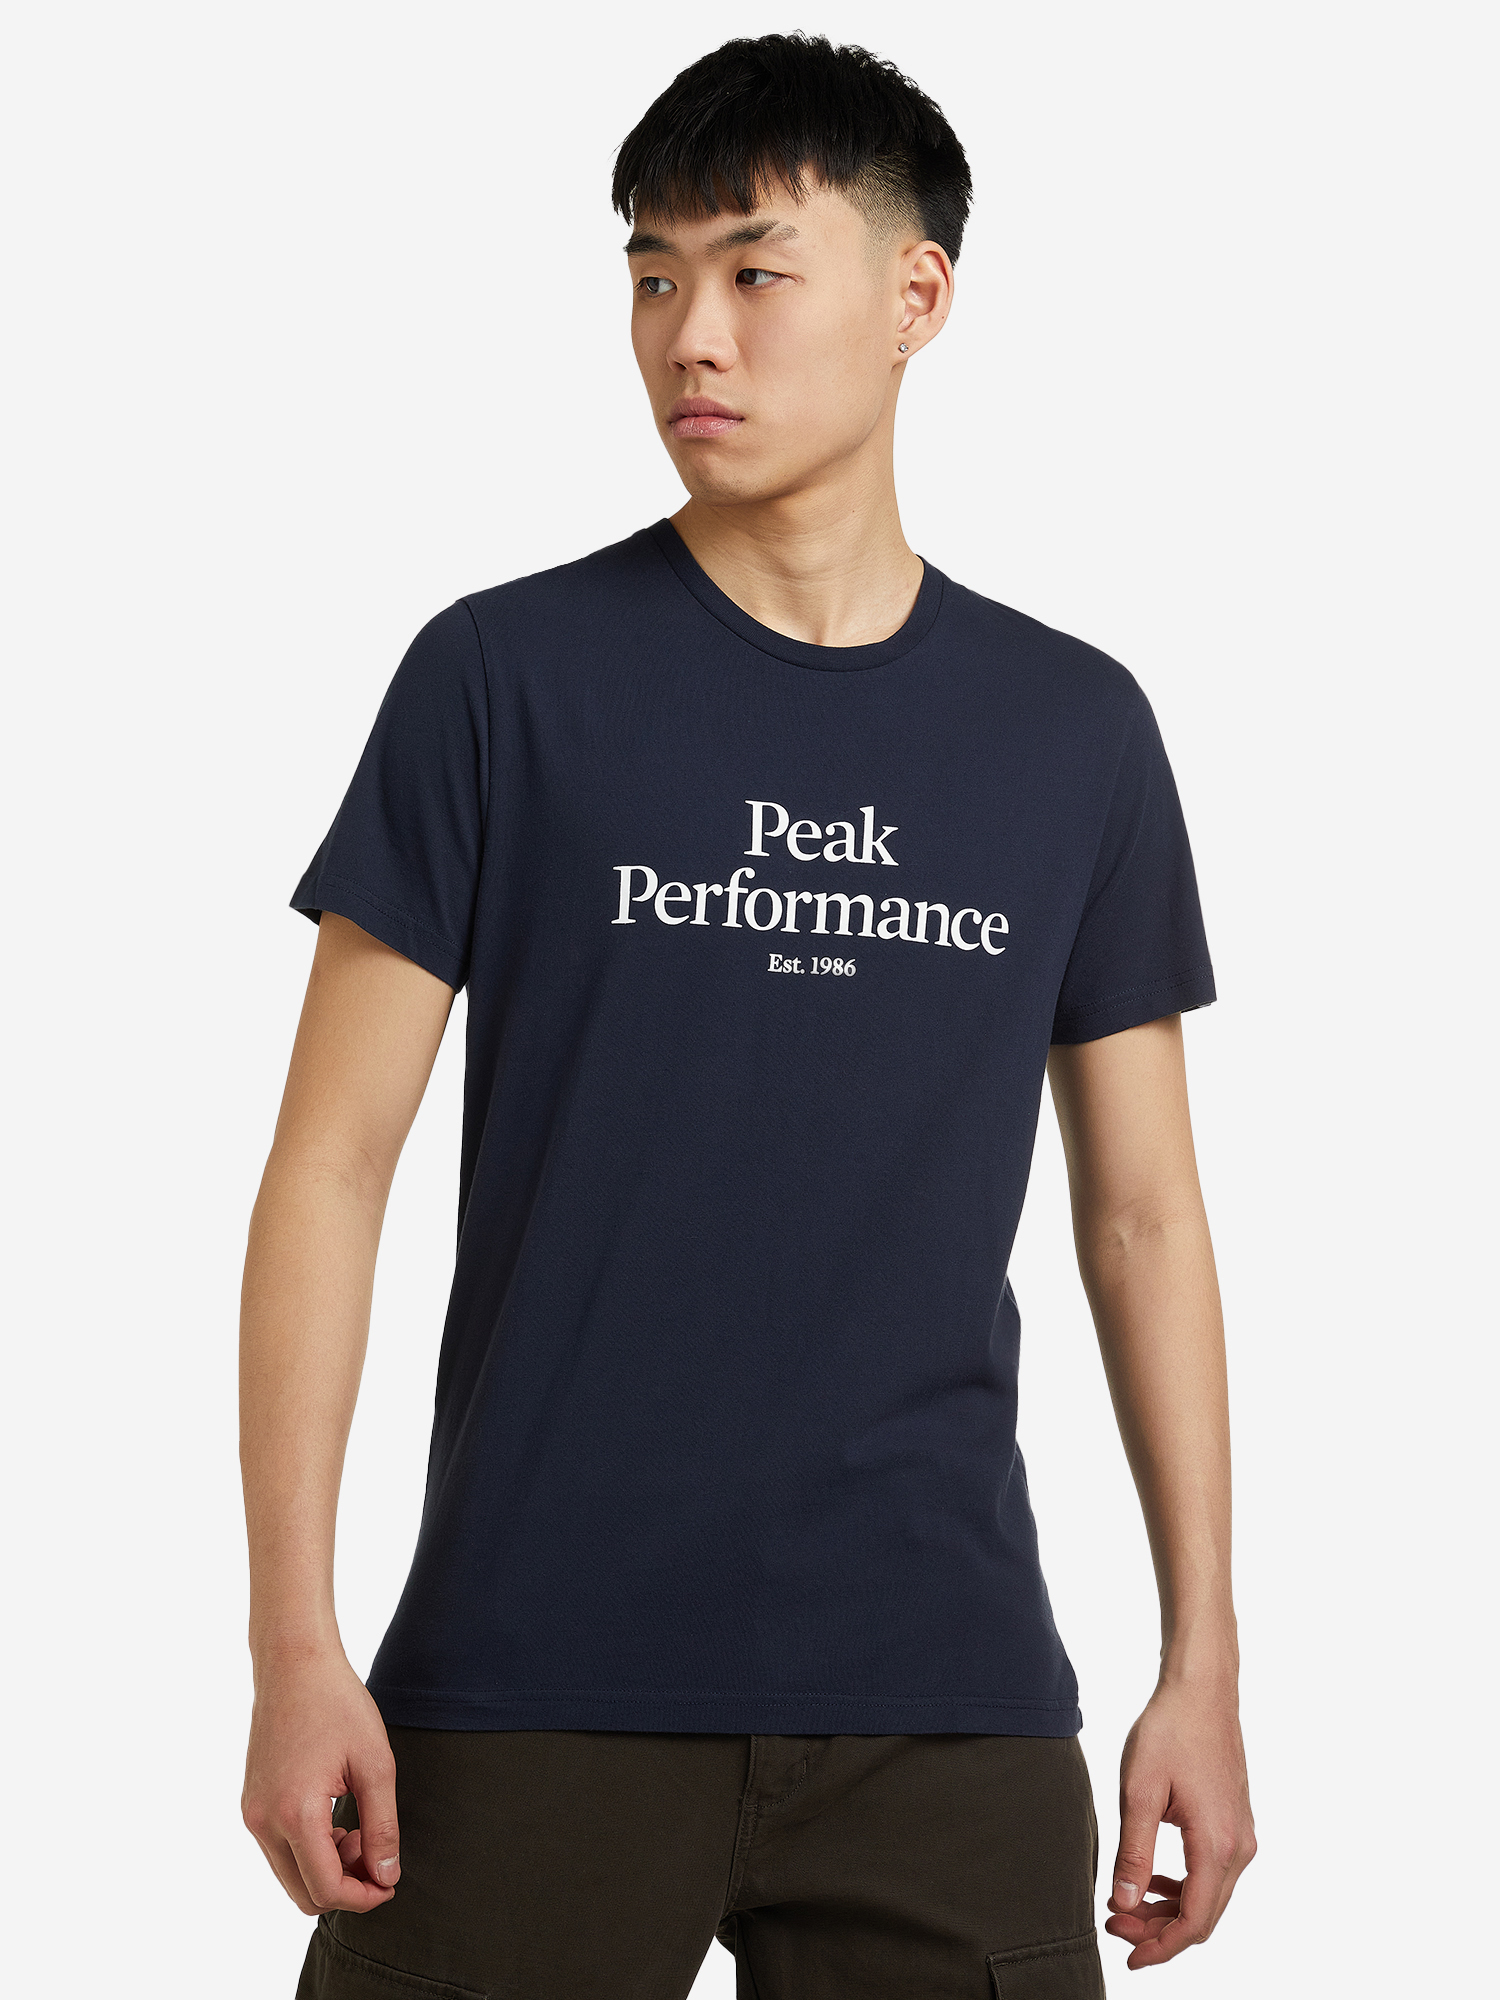 Футболка мужская Peak Performance Original, Синий футболка женская peak performance original tee синий